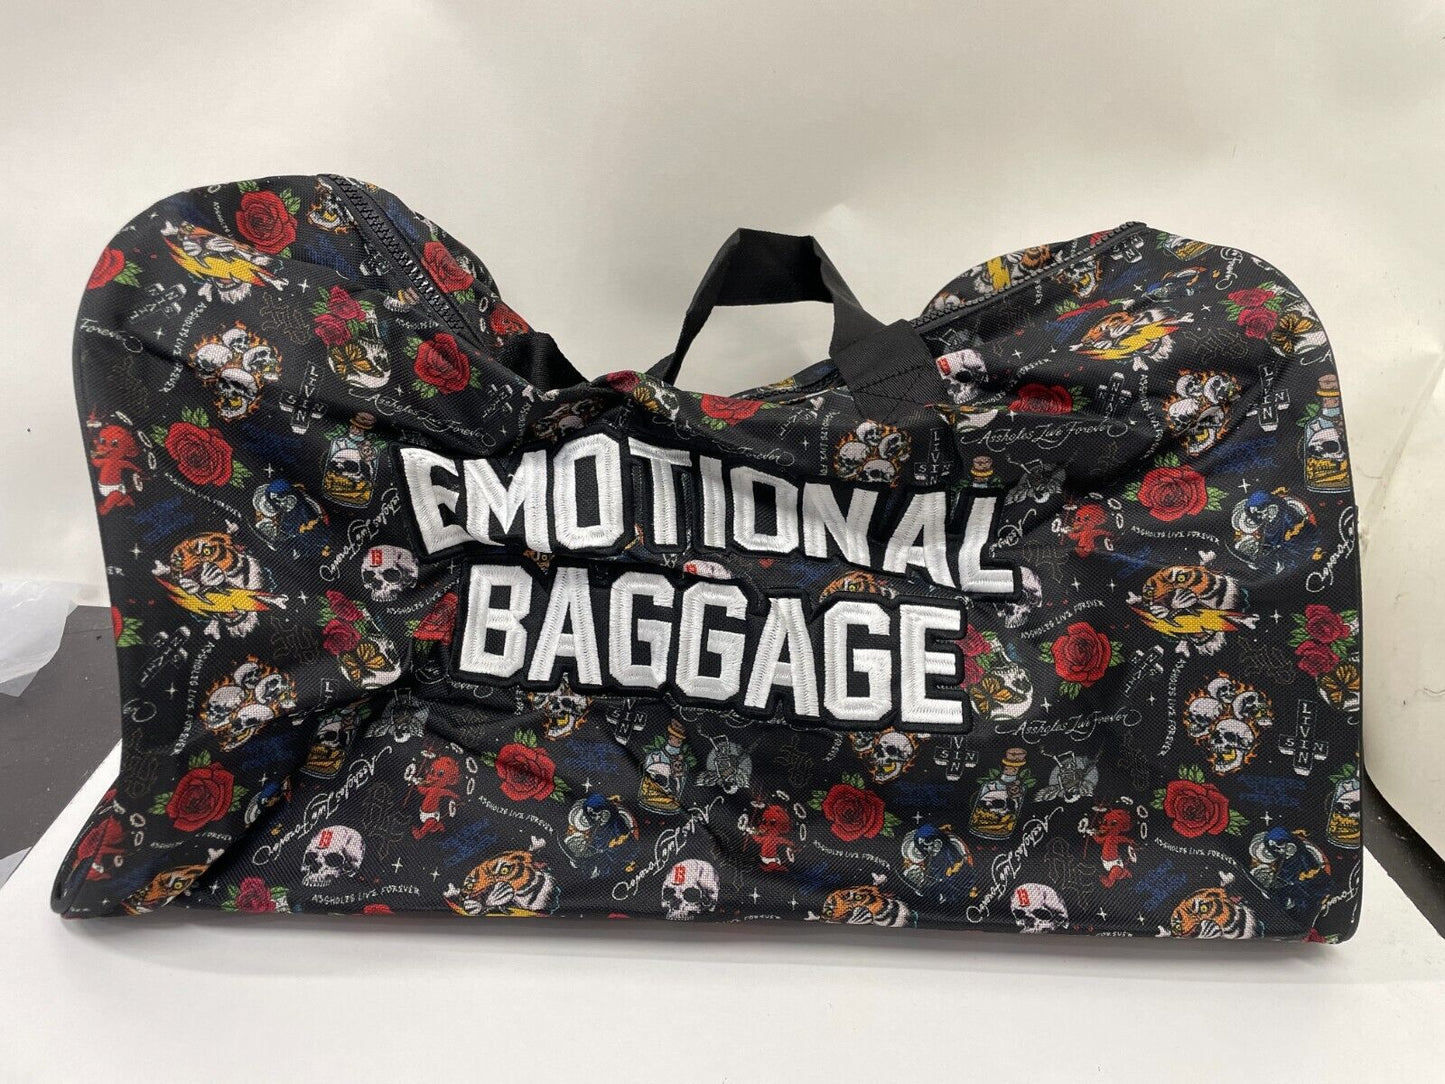 A**holes Live Forever Emotional Baggage Duffel Bag Skull Bottle All-Over Print